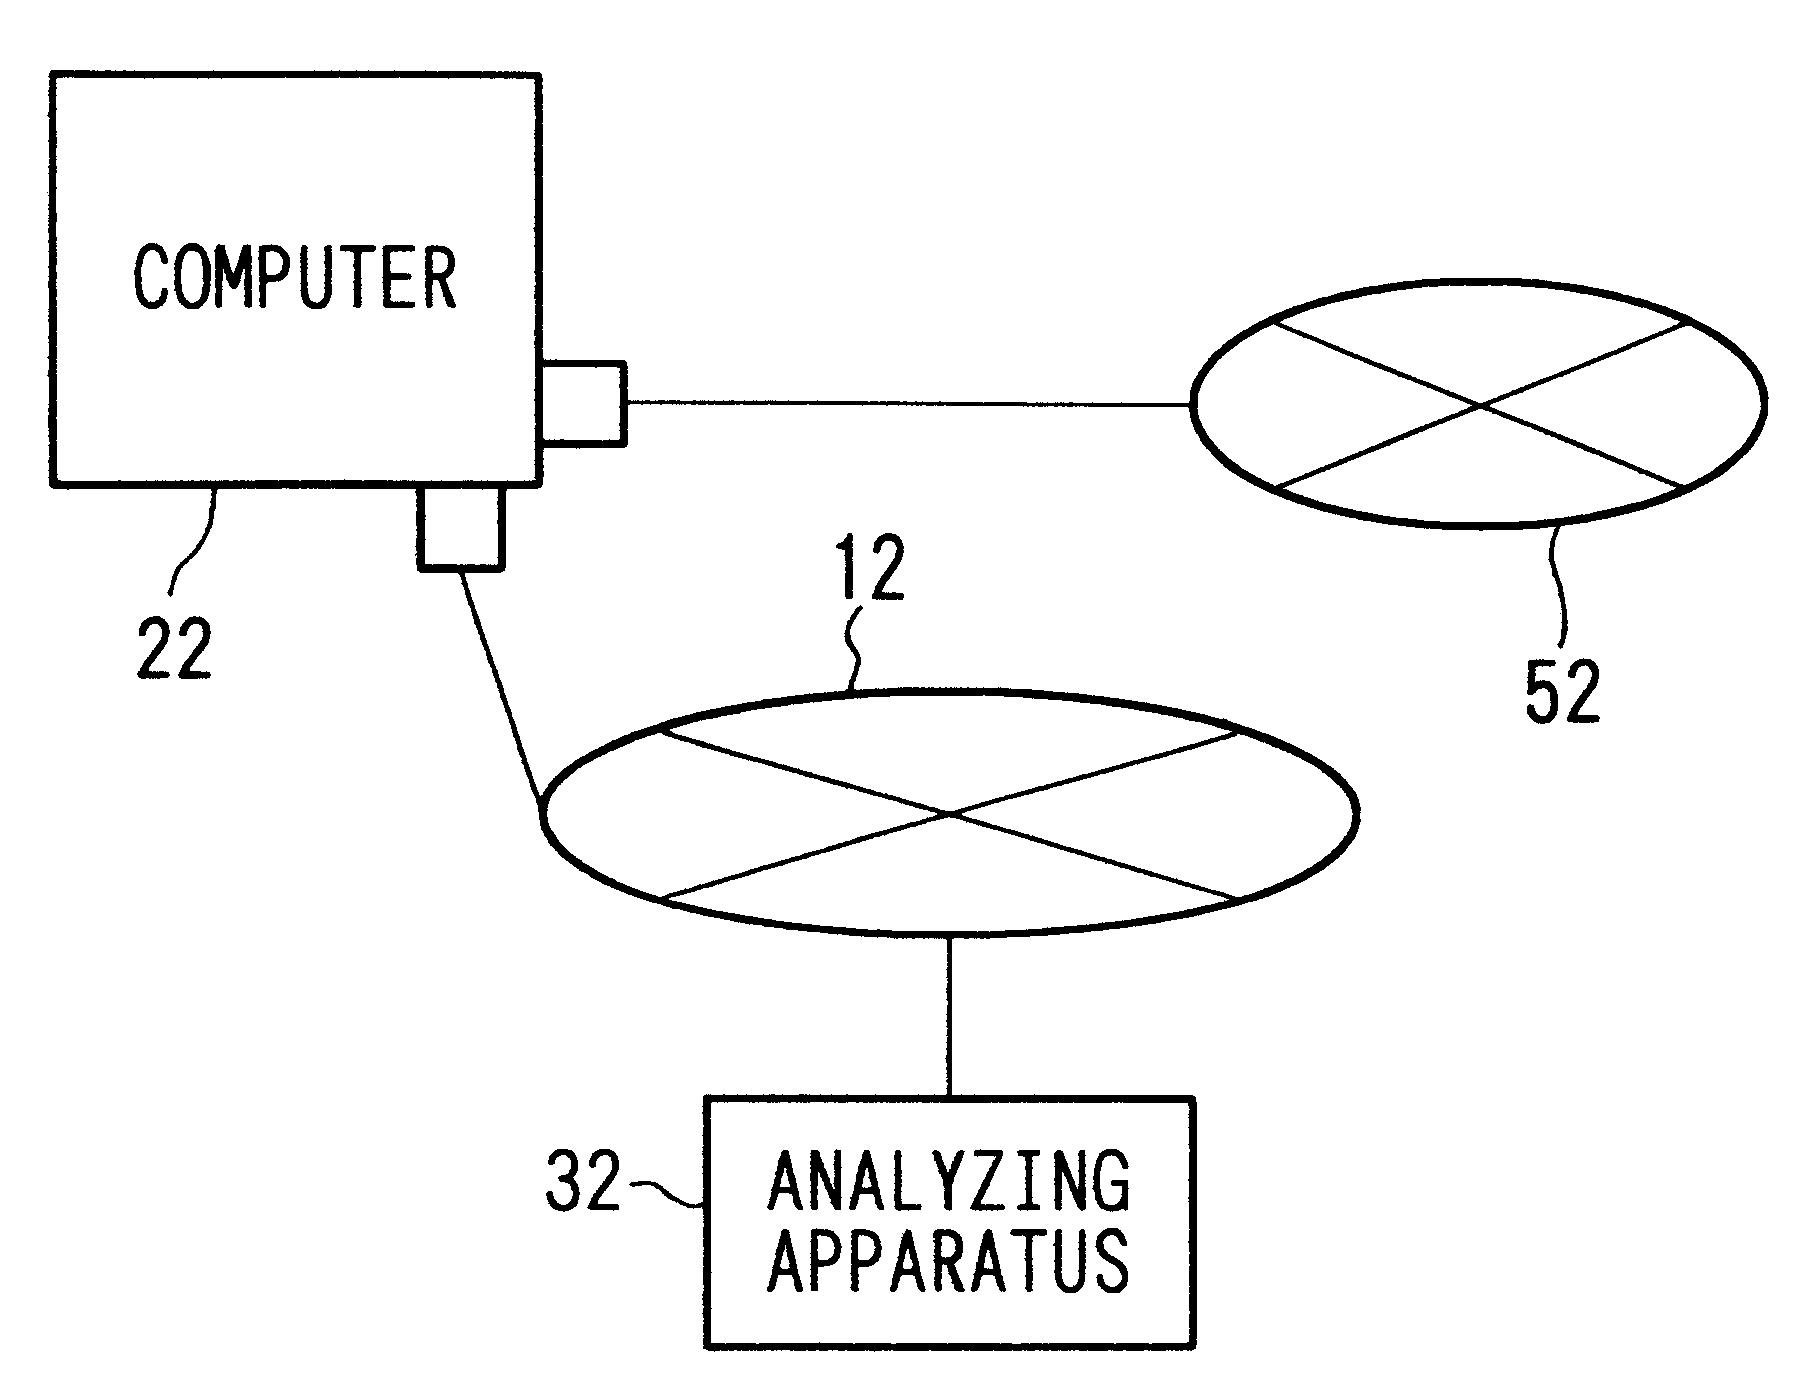 Communication monitoring apparatus